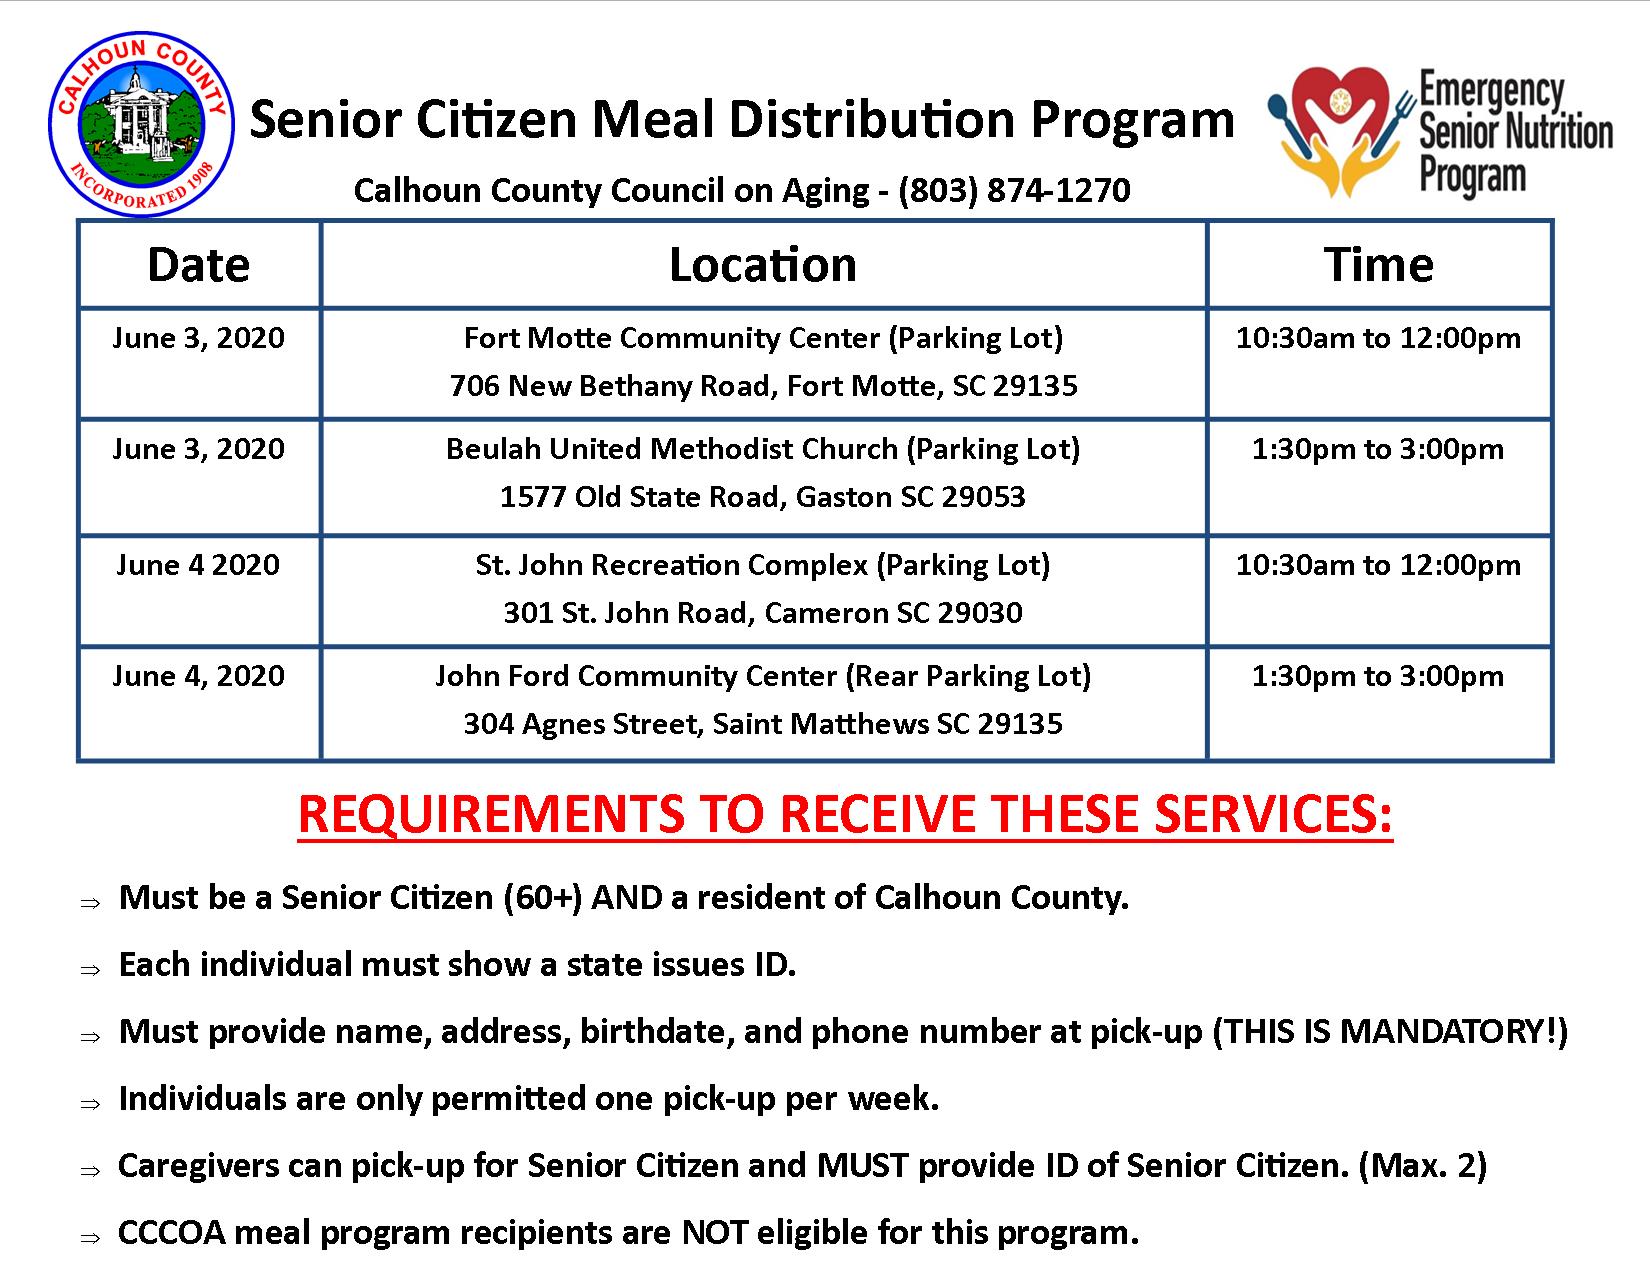 Final week of COA's Senior Citizen Meal Distribution Program